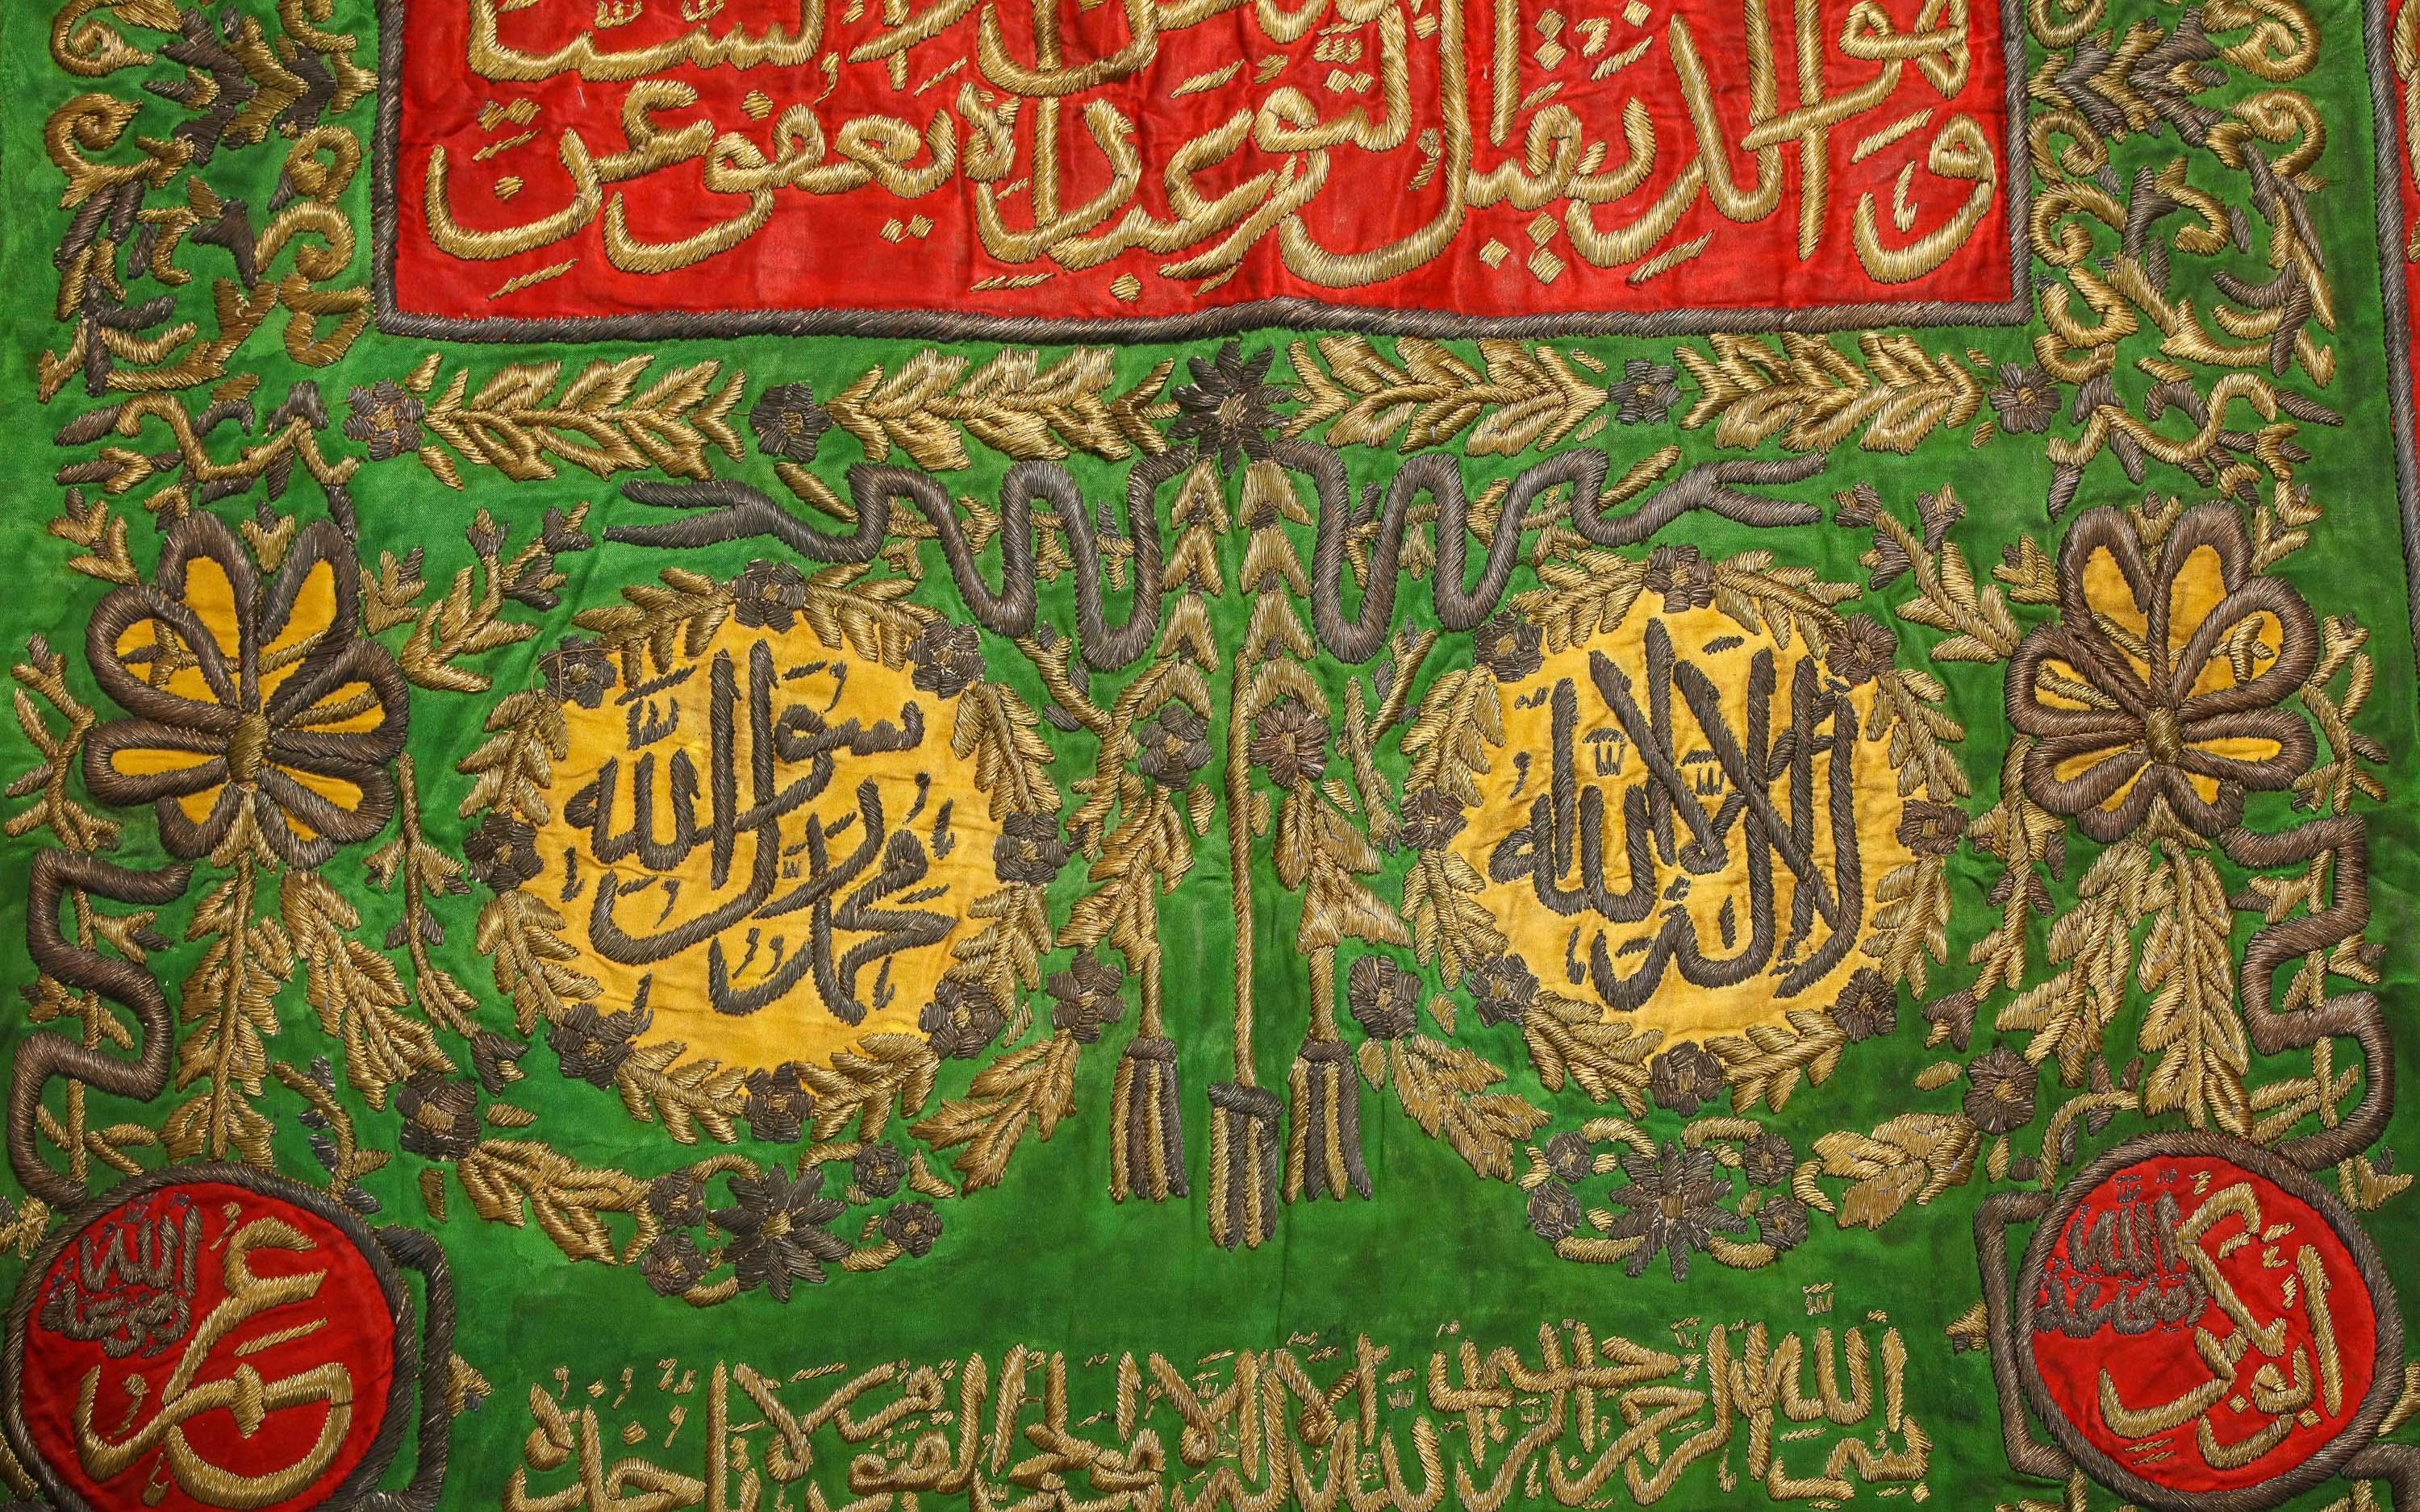 19th Century Islamic Ottoman Silk and Metal-Thread External Curtain Cover for the Holy Kaaba